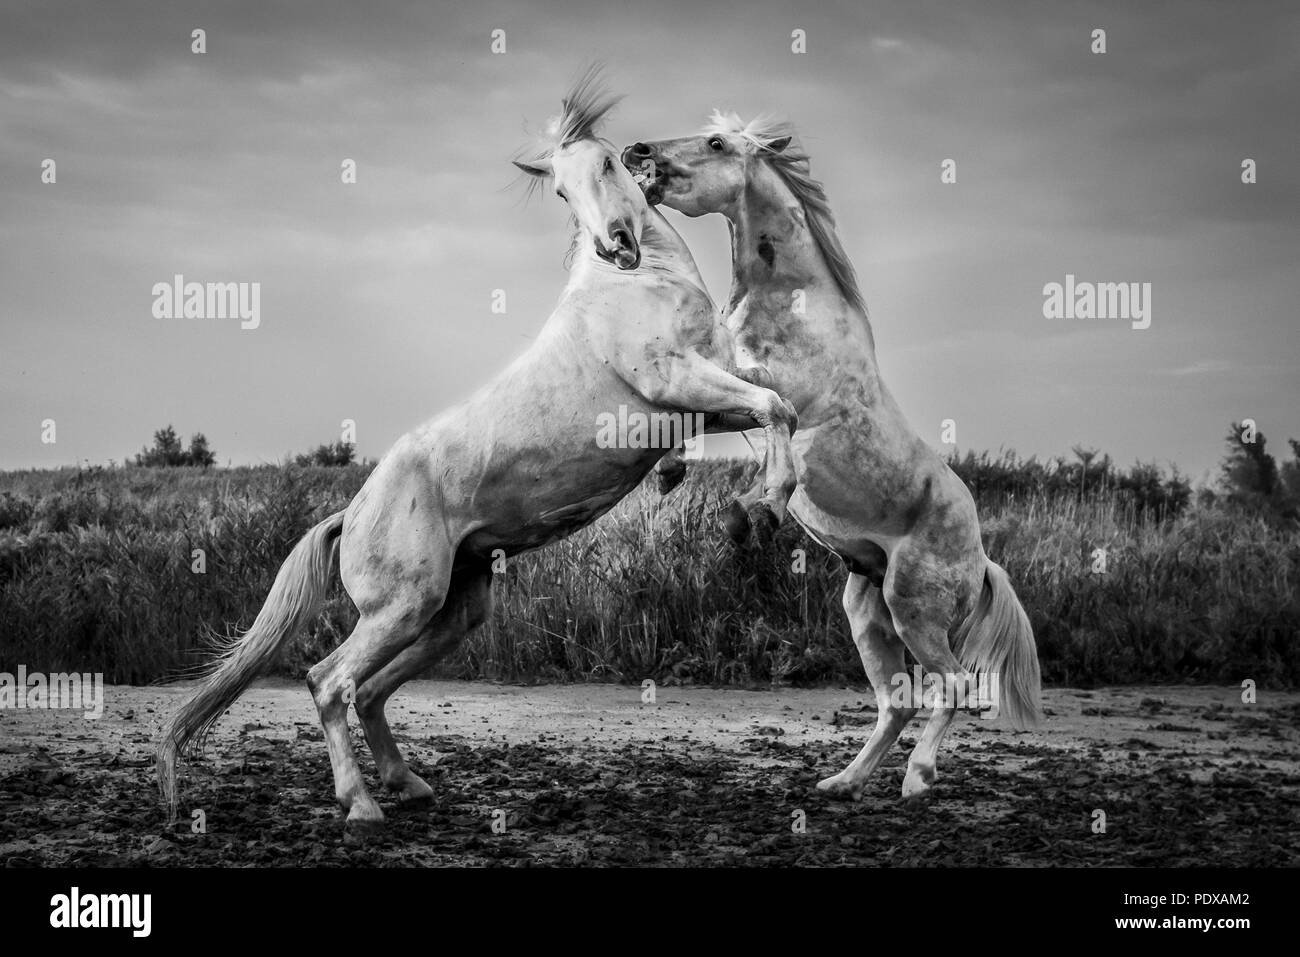 Camargue Horses sparring, Saintes-Maries-de-la-Mer, Camargue, France Stock Photo